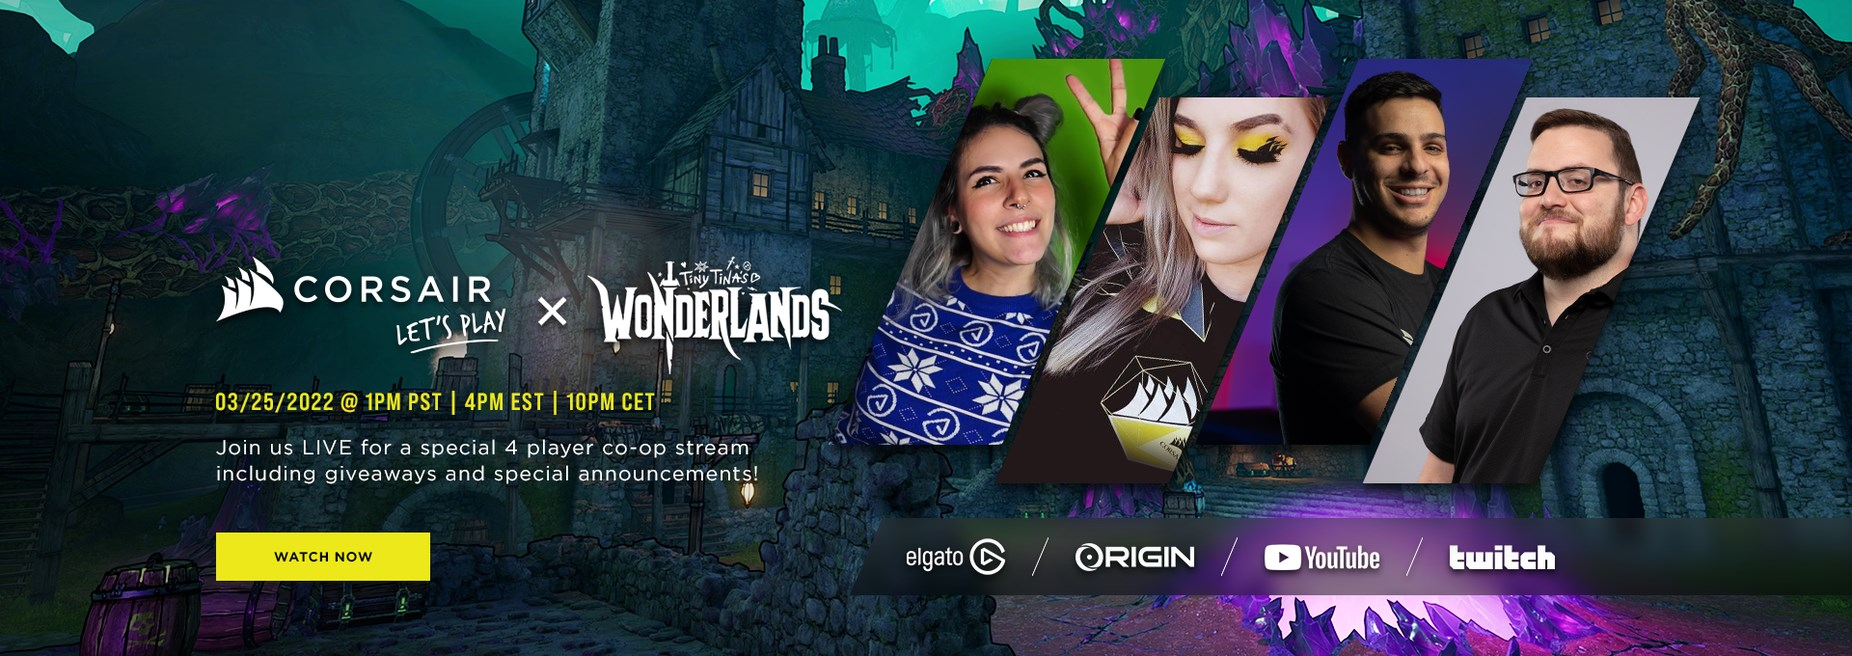 CORSAIR, ORIGIN PC, and Elgato host Let's Play featuring Tiny Tina's Wonderlands.